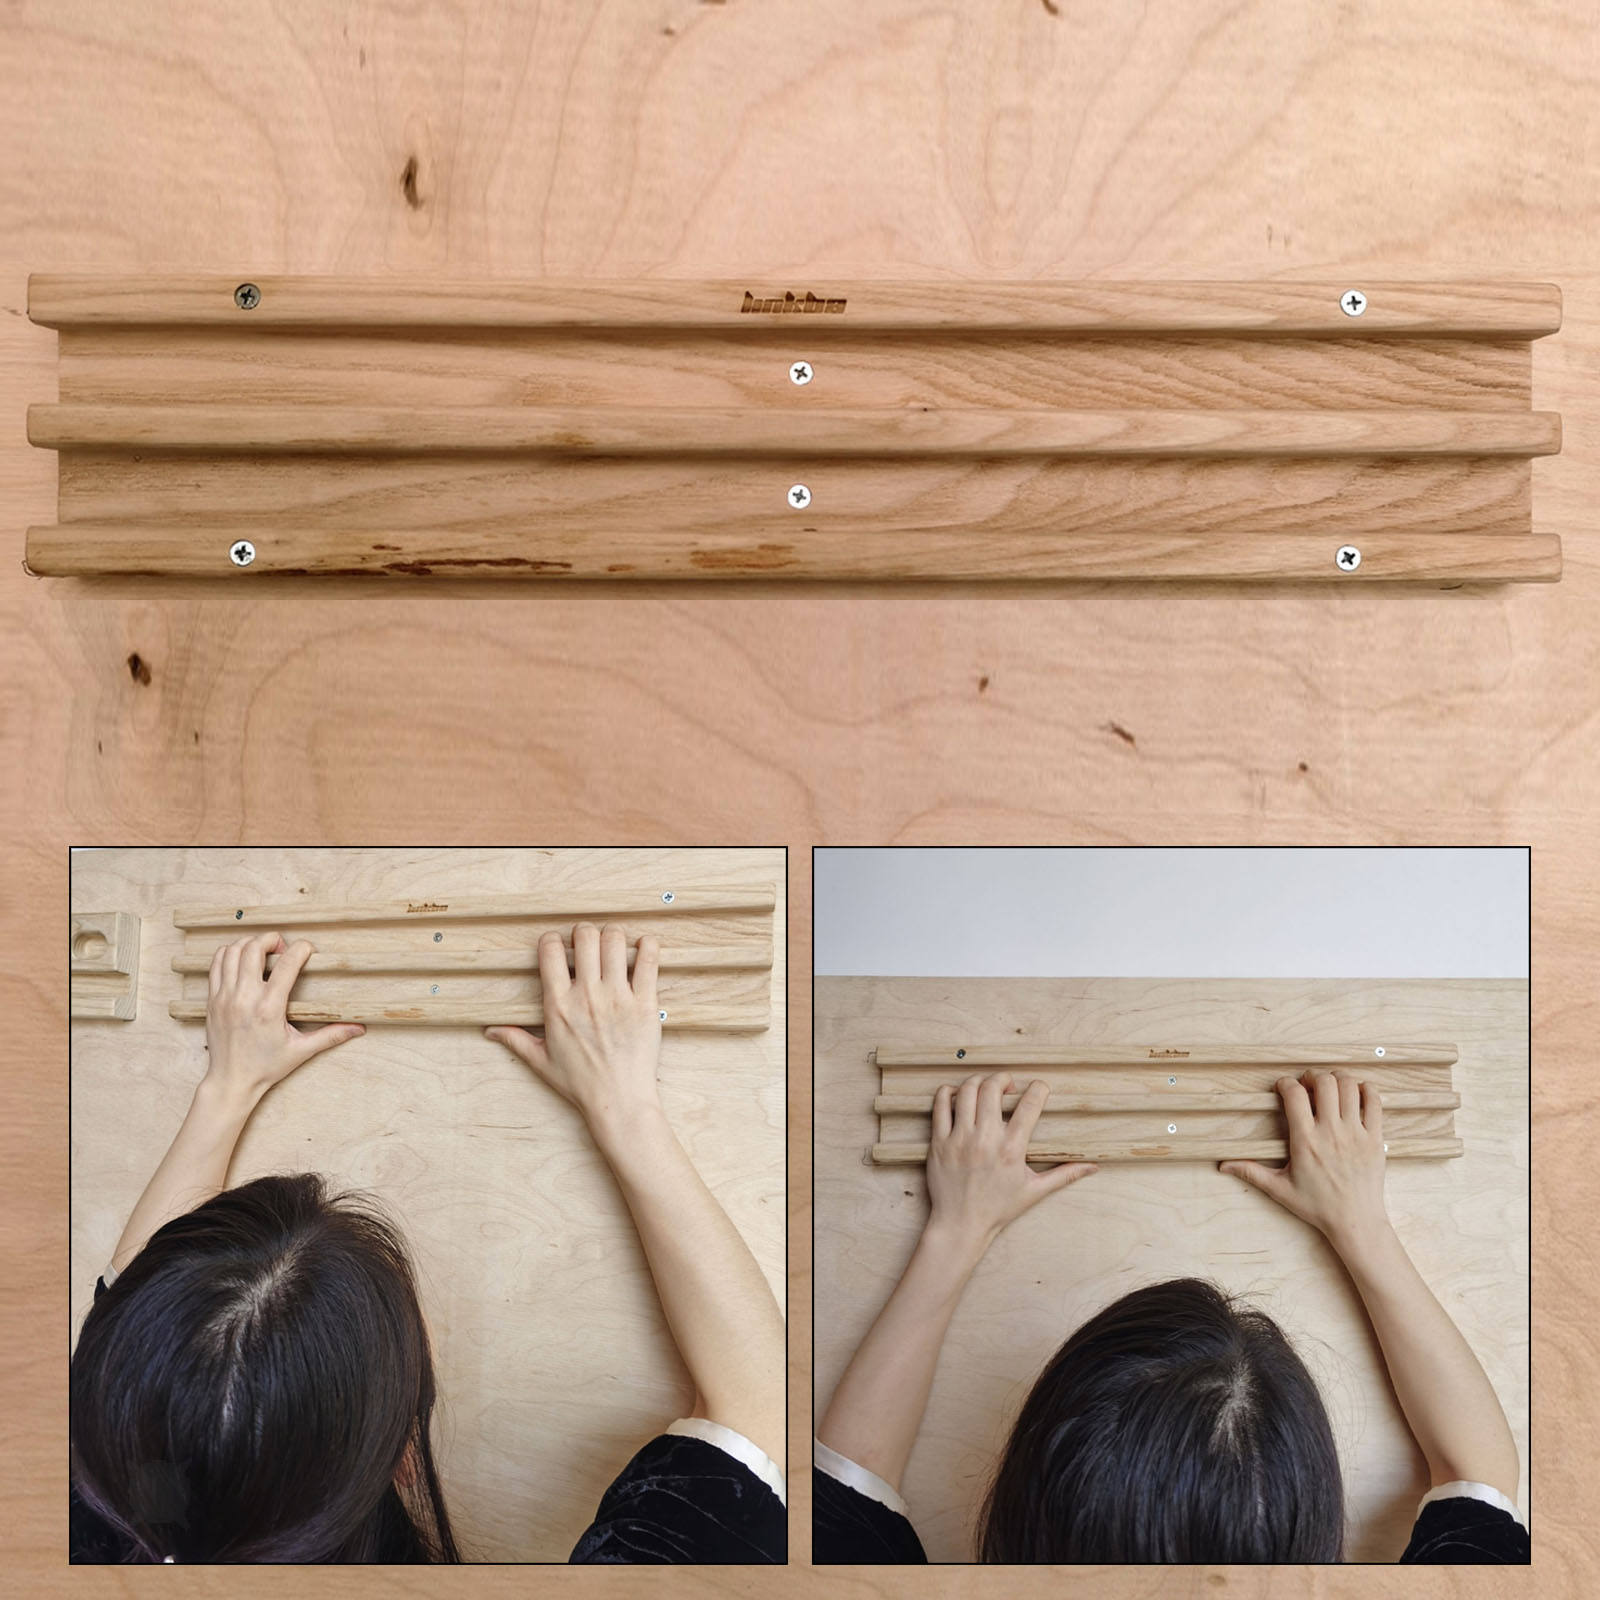 Wooden Climbing Hangboard Wall Grip Trainer Hand Fingers Board Strength